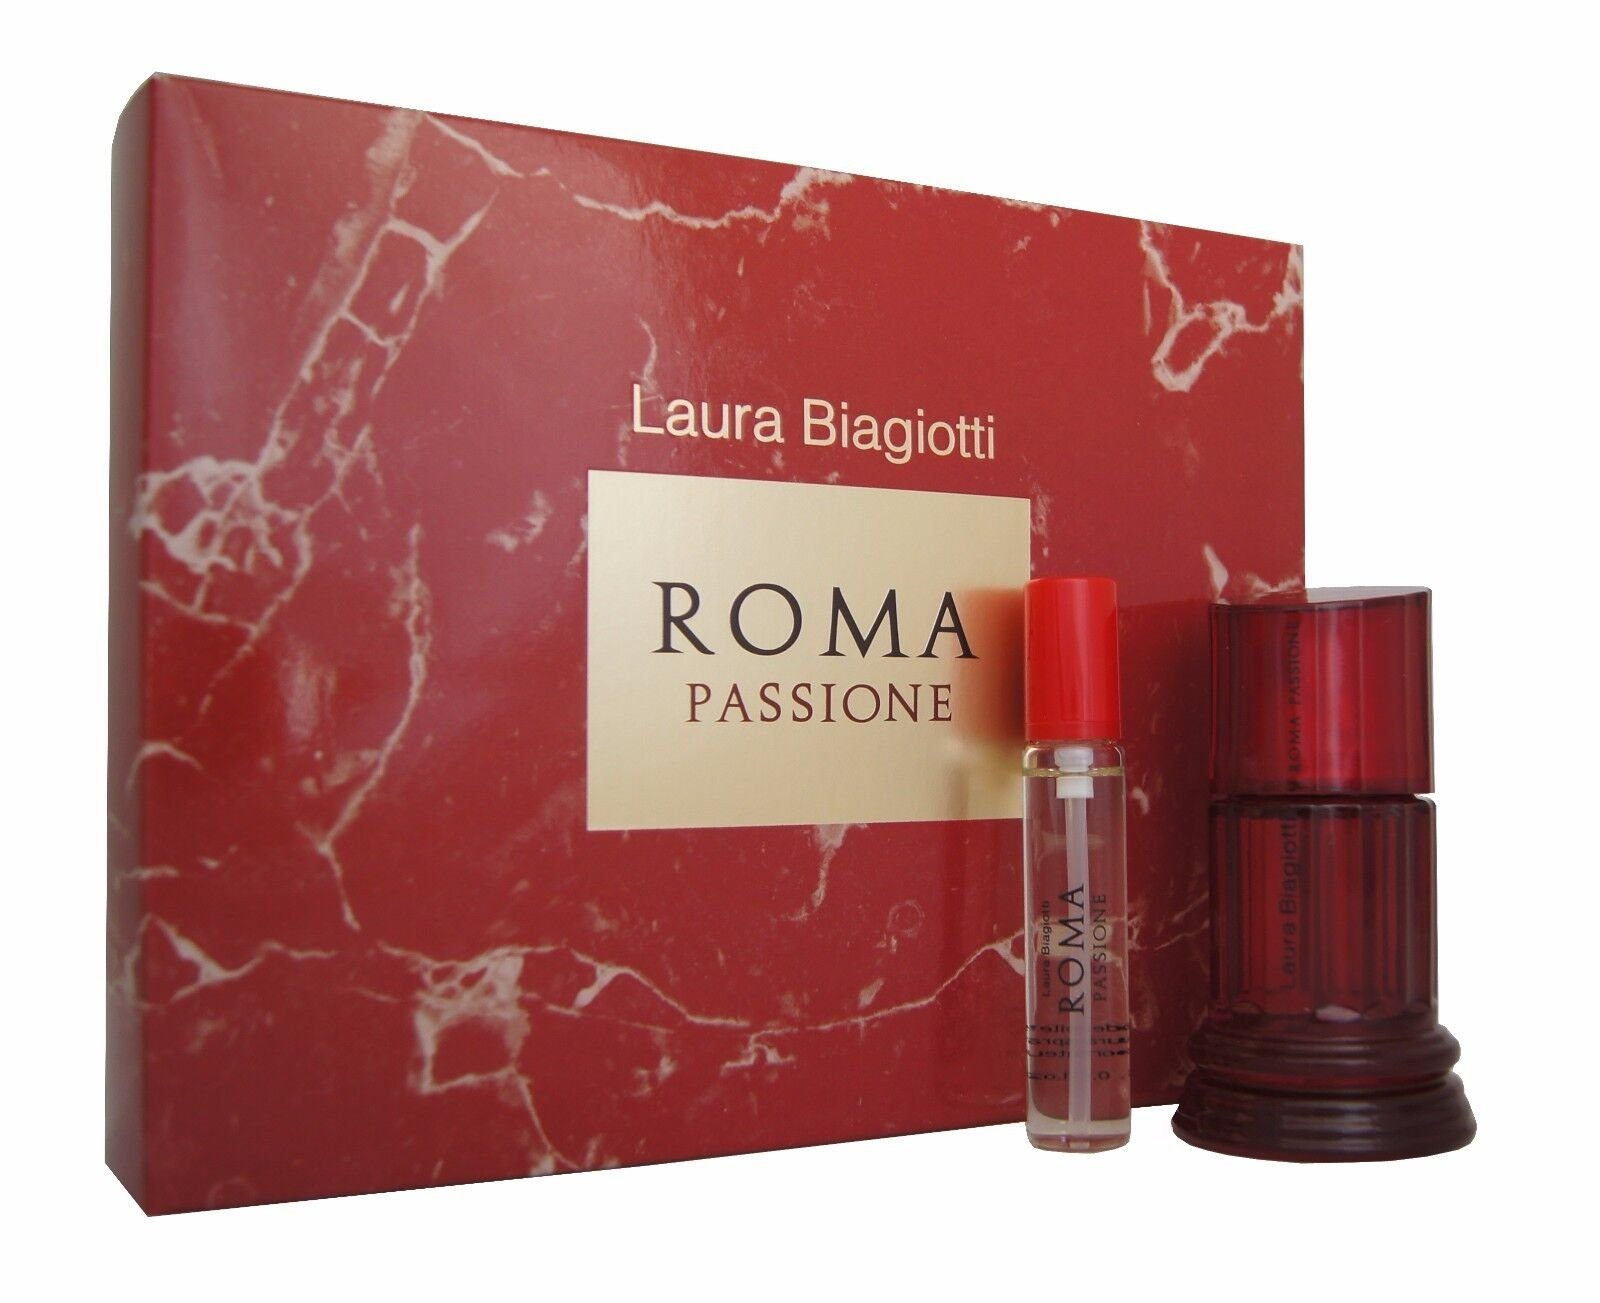 Laura Biagiotti Eau de 1-tlg. Toilette EDT Laura Duft-Set + Roma Passione 15ml, Biagiotti 50ml EDT